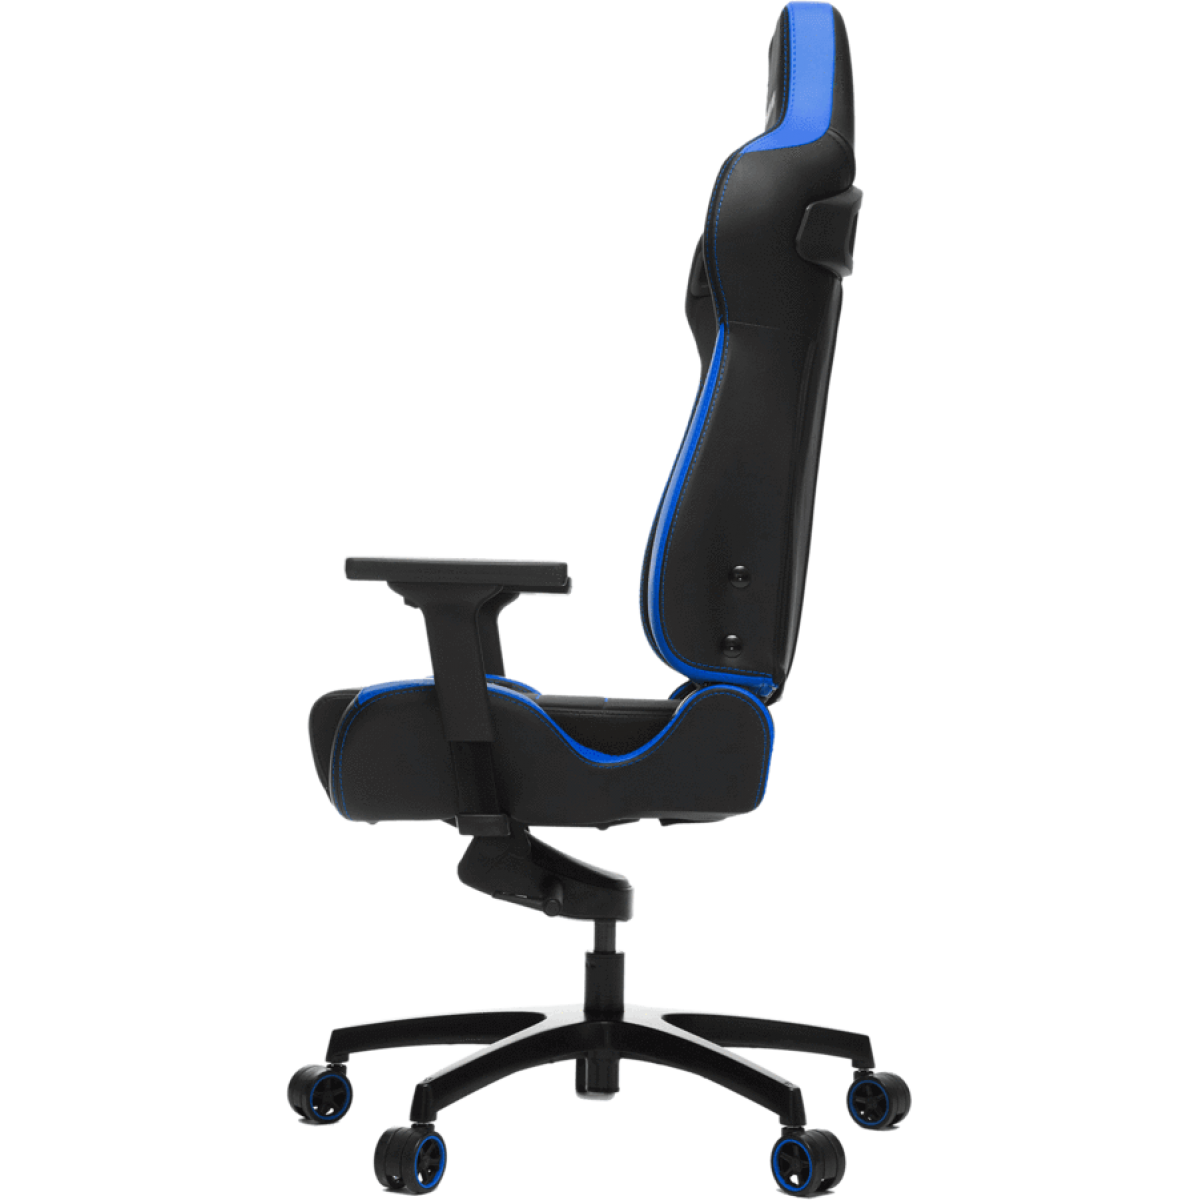 Cadeira Gamer Vertagear Racing PL4500, Black-Blue, VG-PL4500_BL